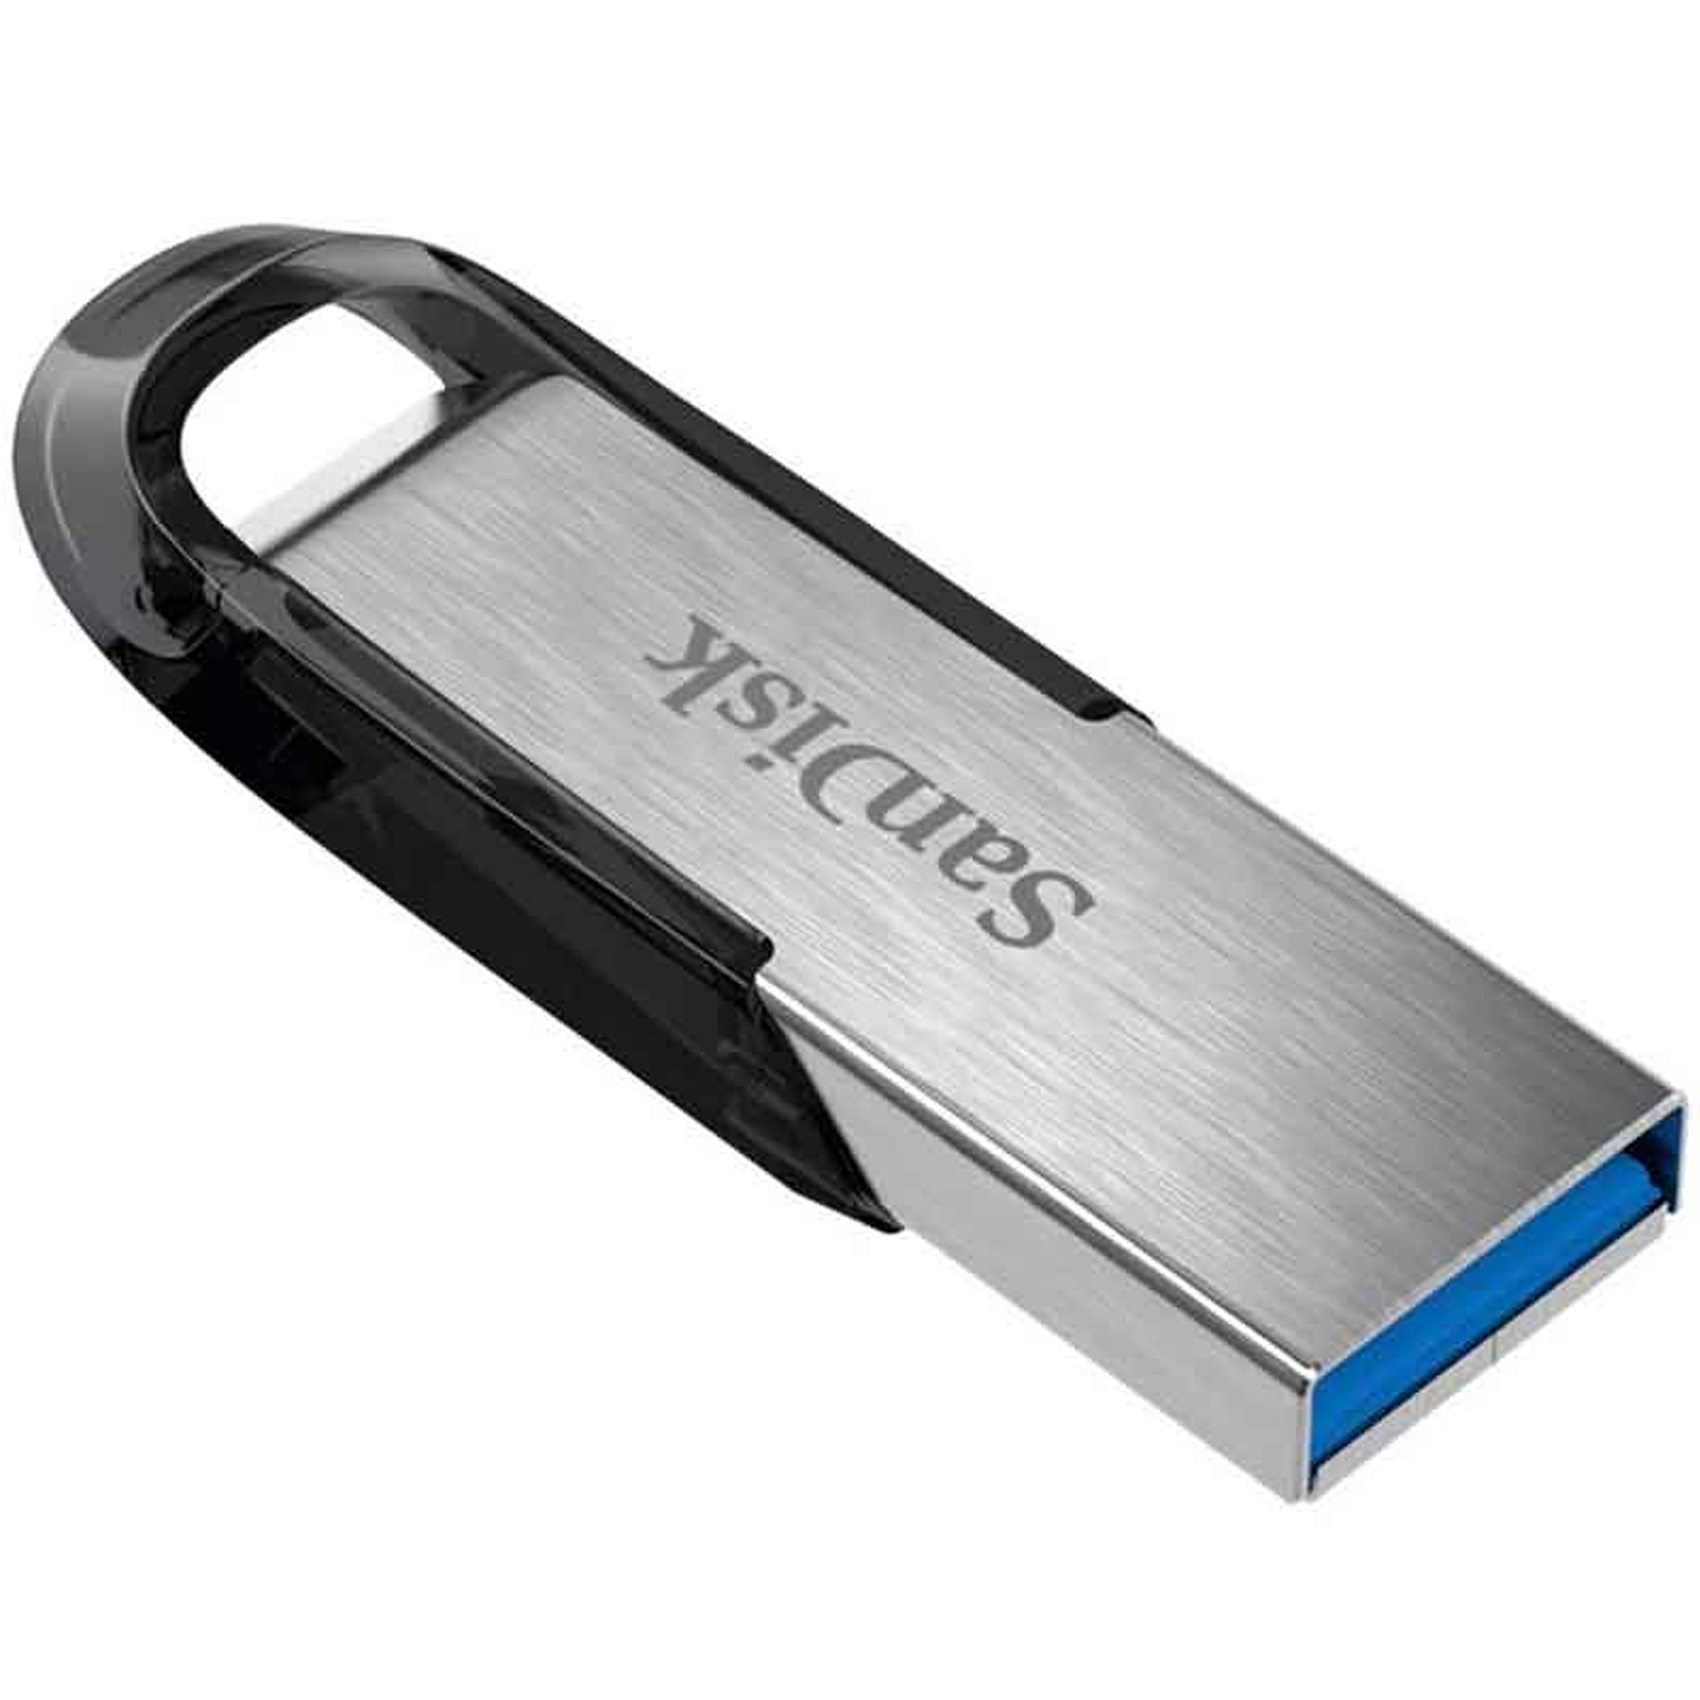 Memoria USB 128GB SANDISK USB 3.0 Metalica SDCZ73-128G-G46